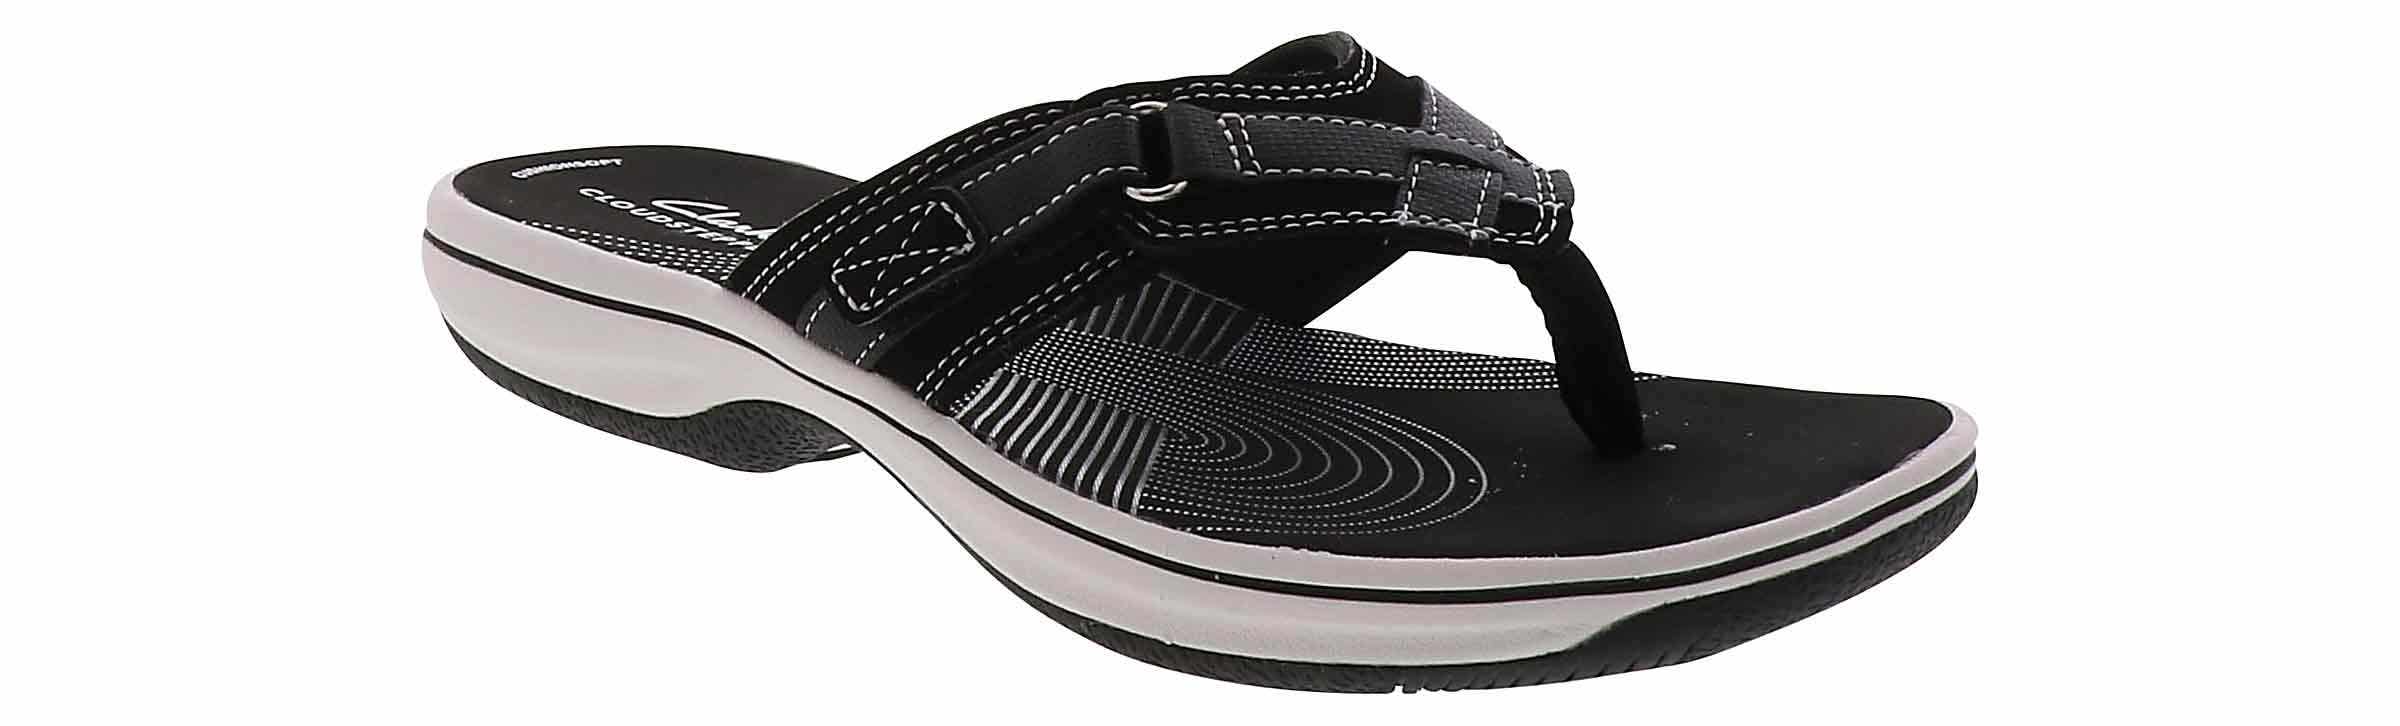 clarks sea breeze sandals